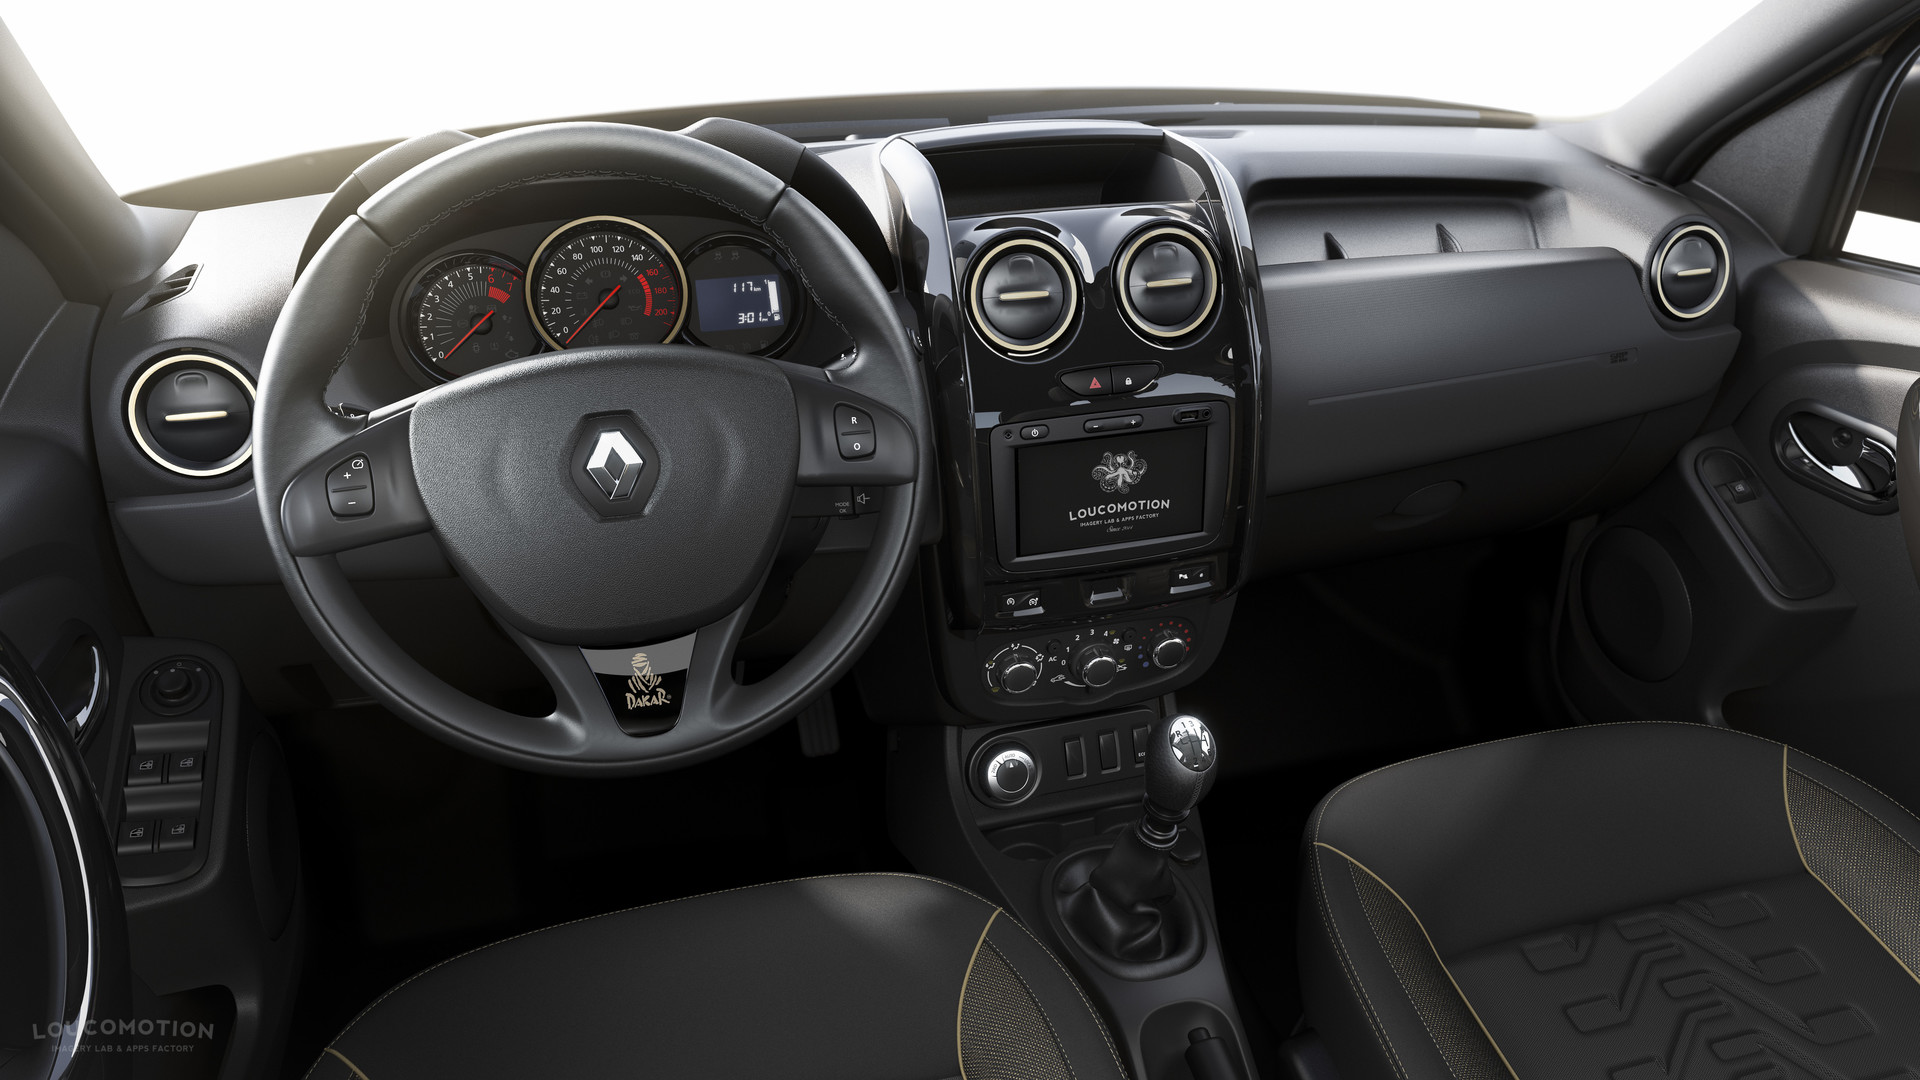 Next generation 2017 Renault (Dacia) Duster rendered